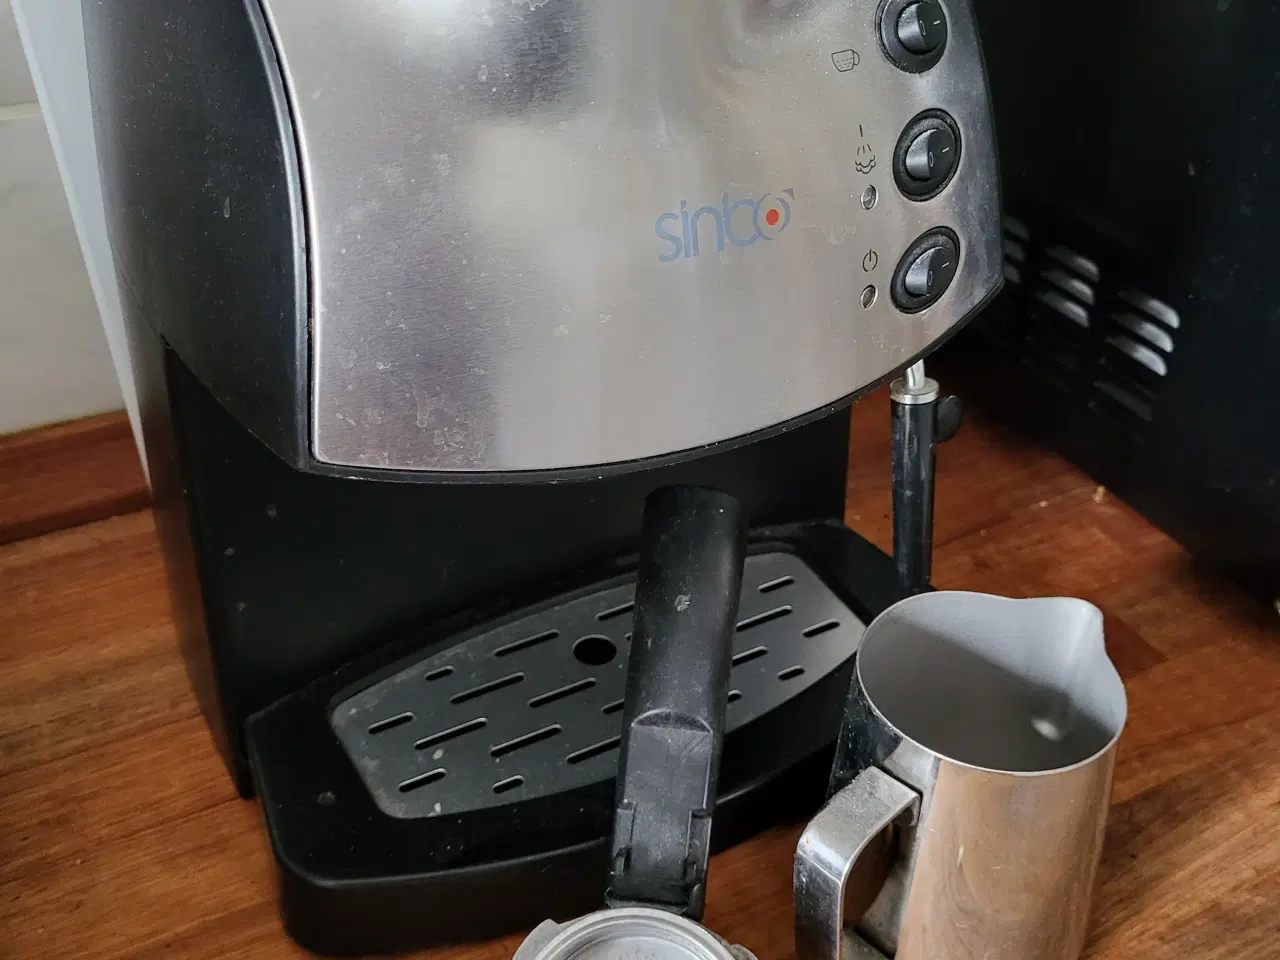 Billede 2 - Kaffemaskine 